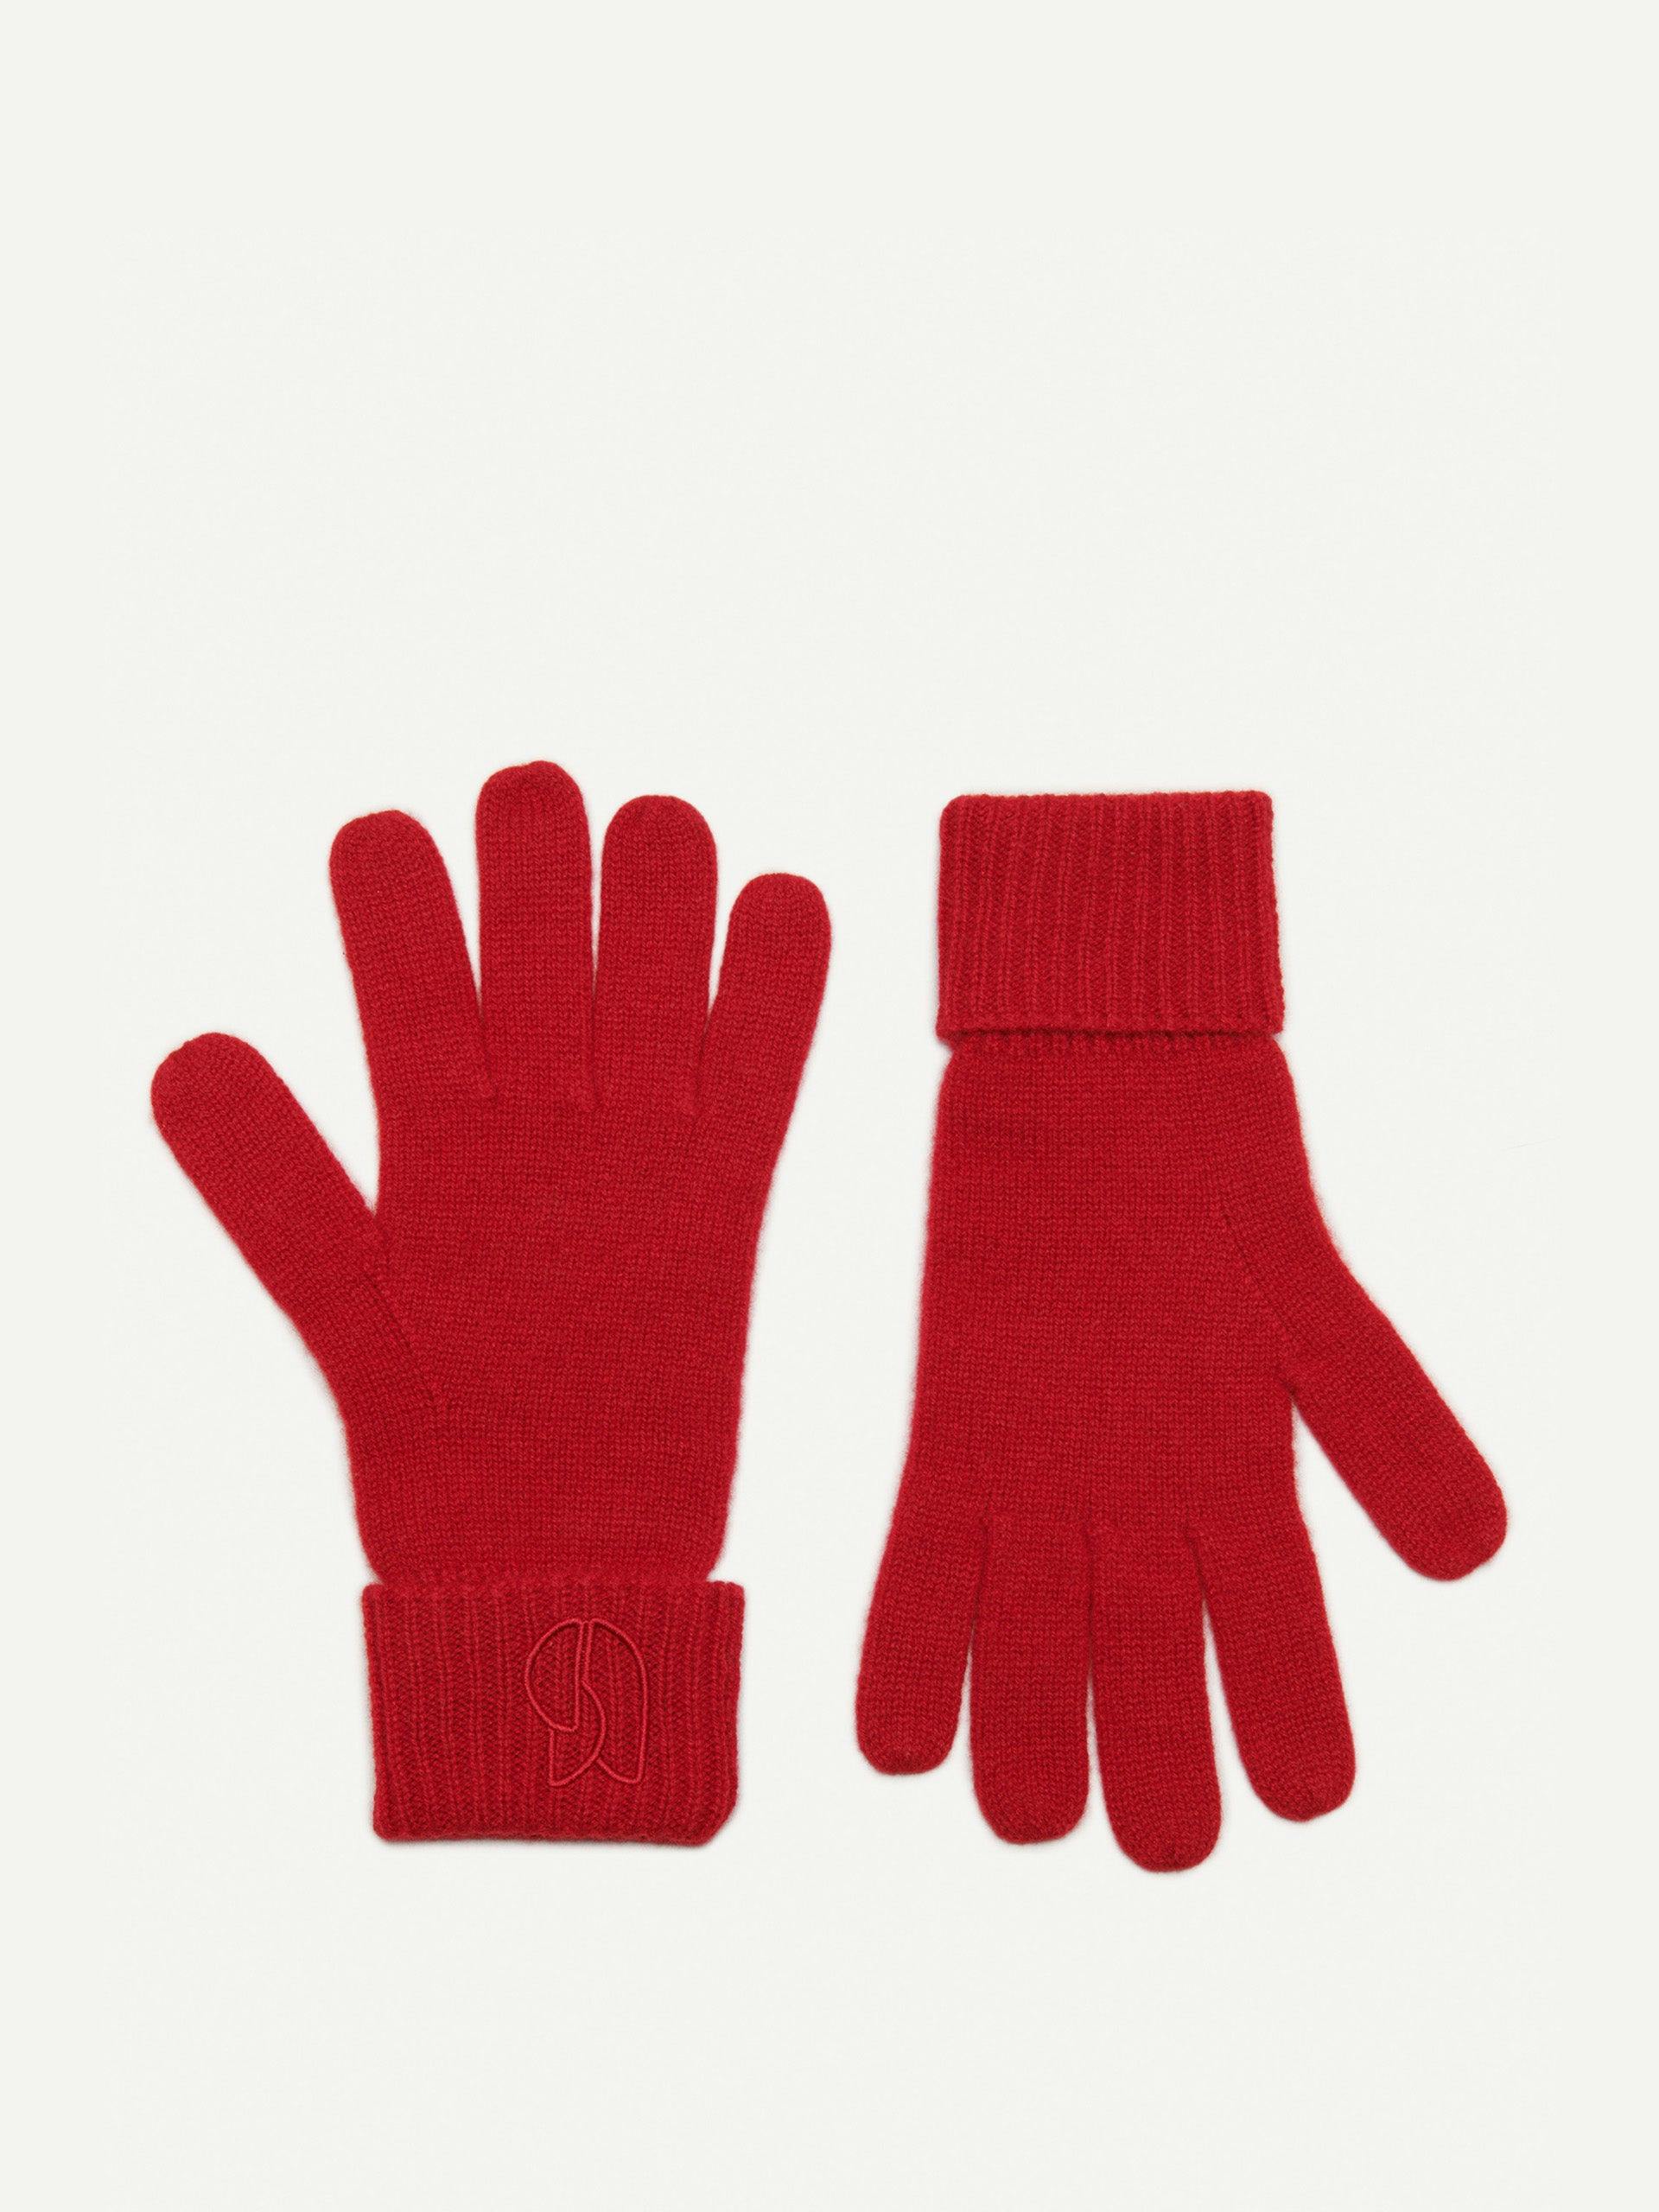 Soft red gloves